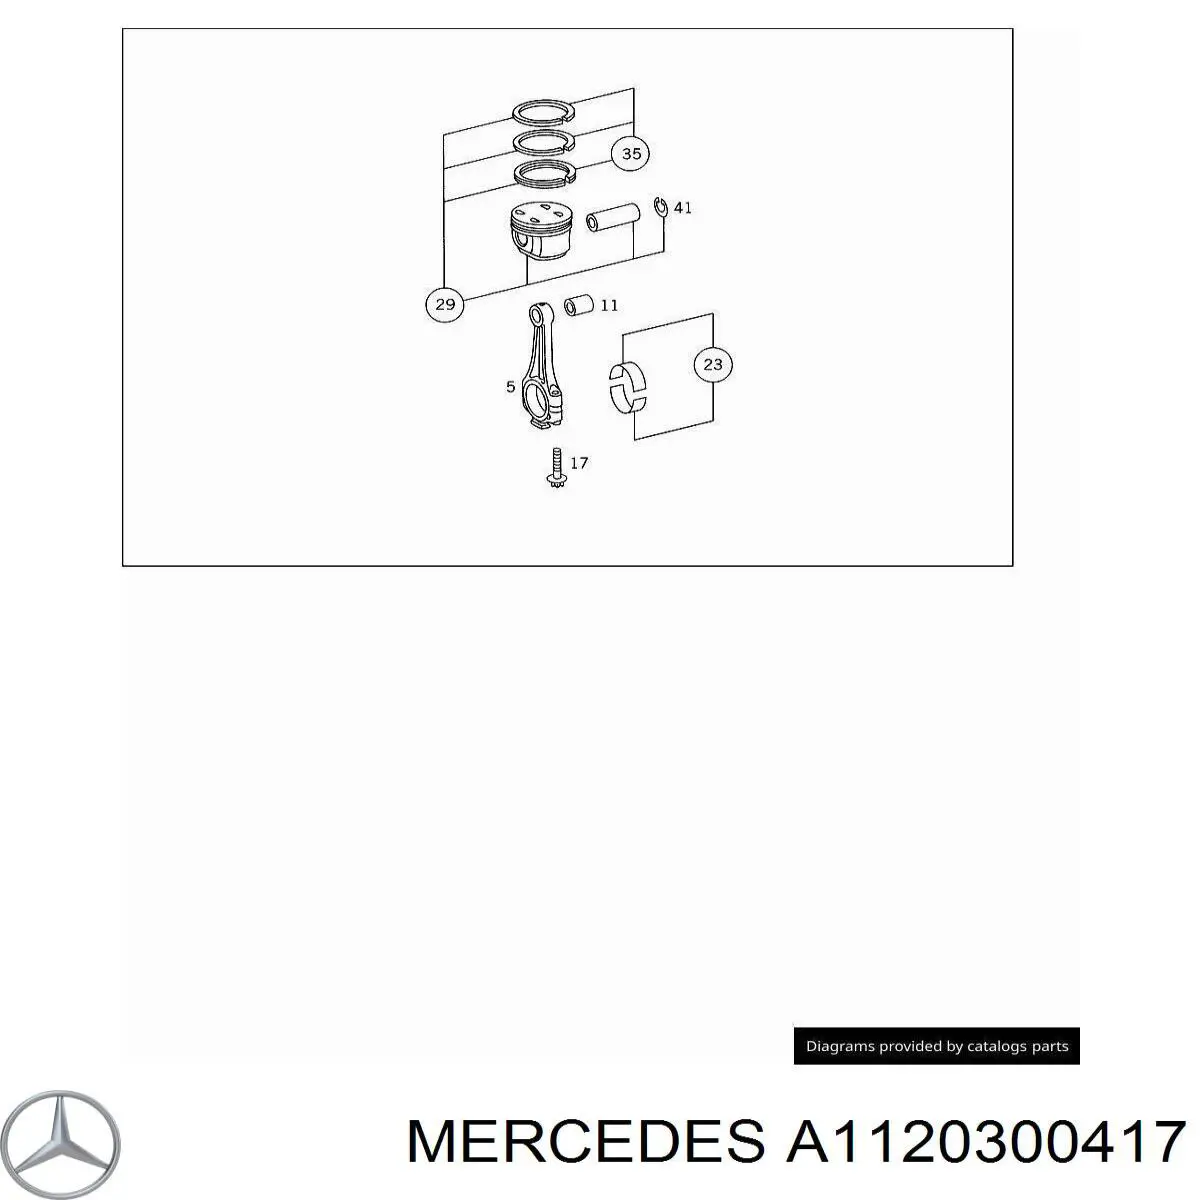 1120370901 Mercedes поршень в комплекте на 1 цилиндр, std